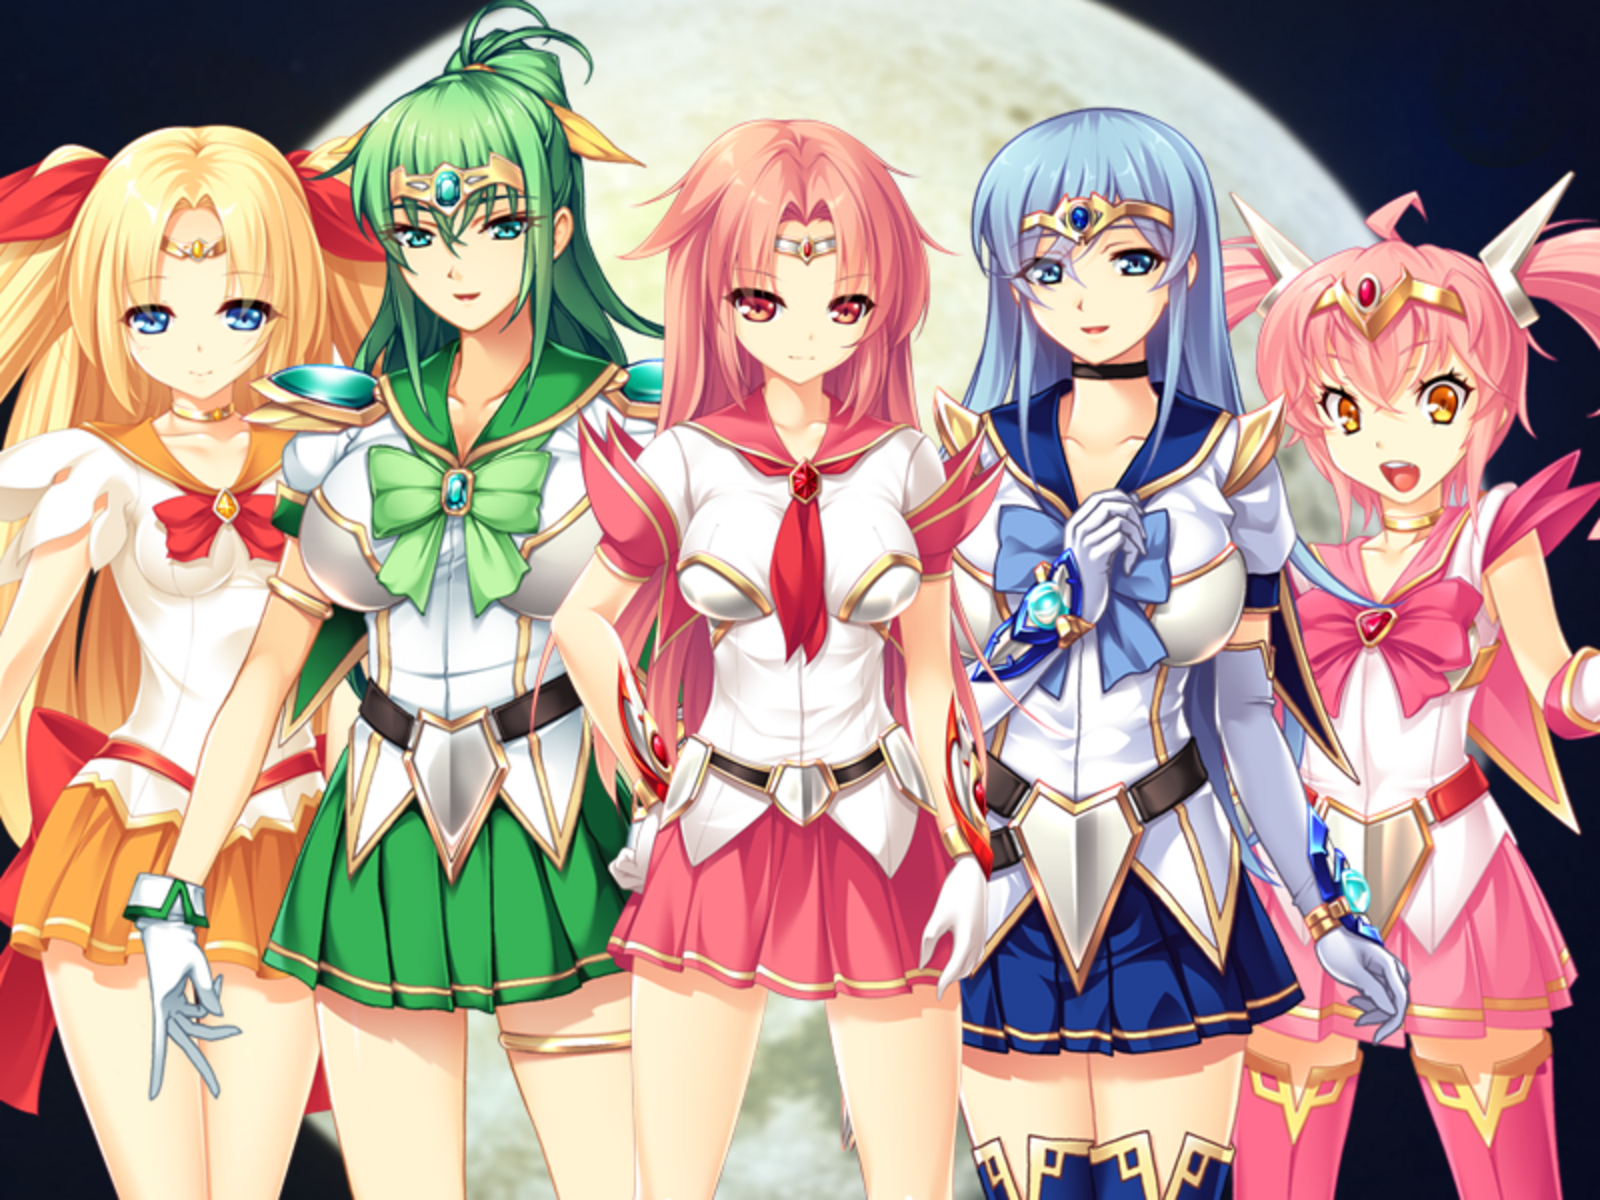 Anime Anime Girls Magical Girls Original Characters Group Of Women Artwork Digital Art Fan Art 1600x1200